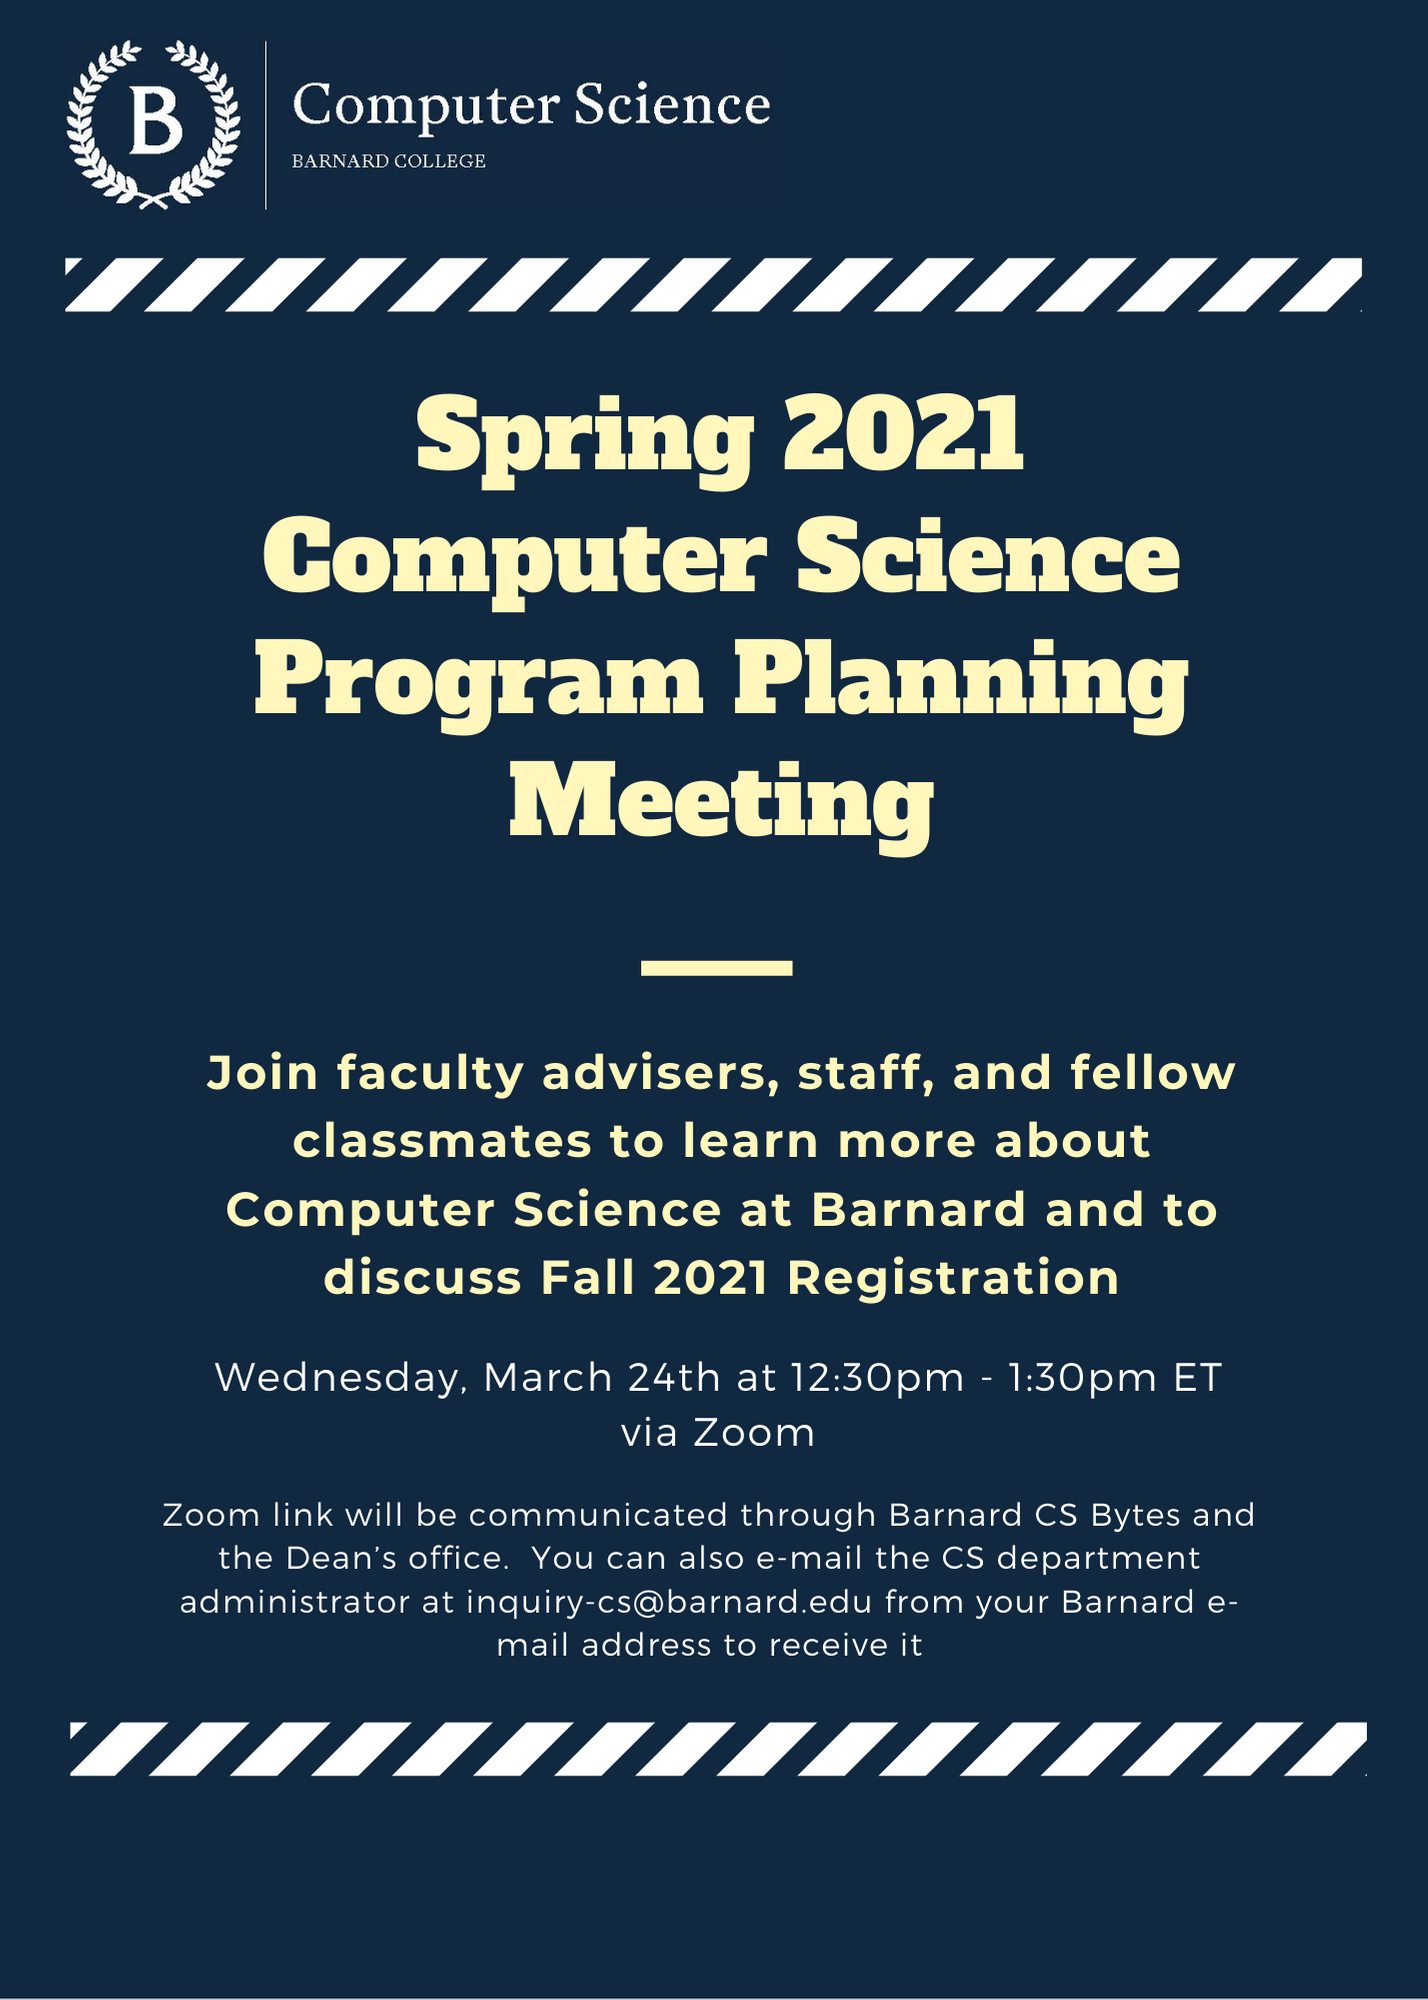 Spring 2021 Program Planning Meeting